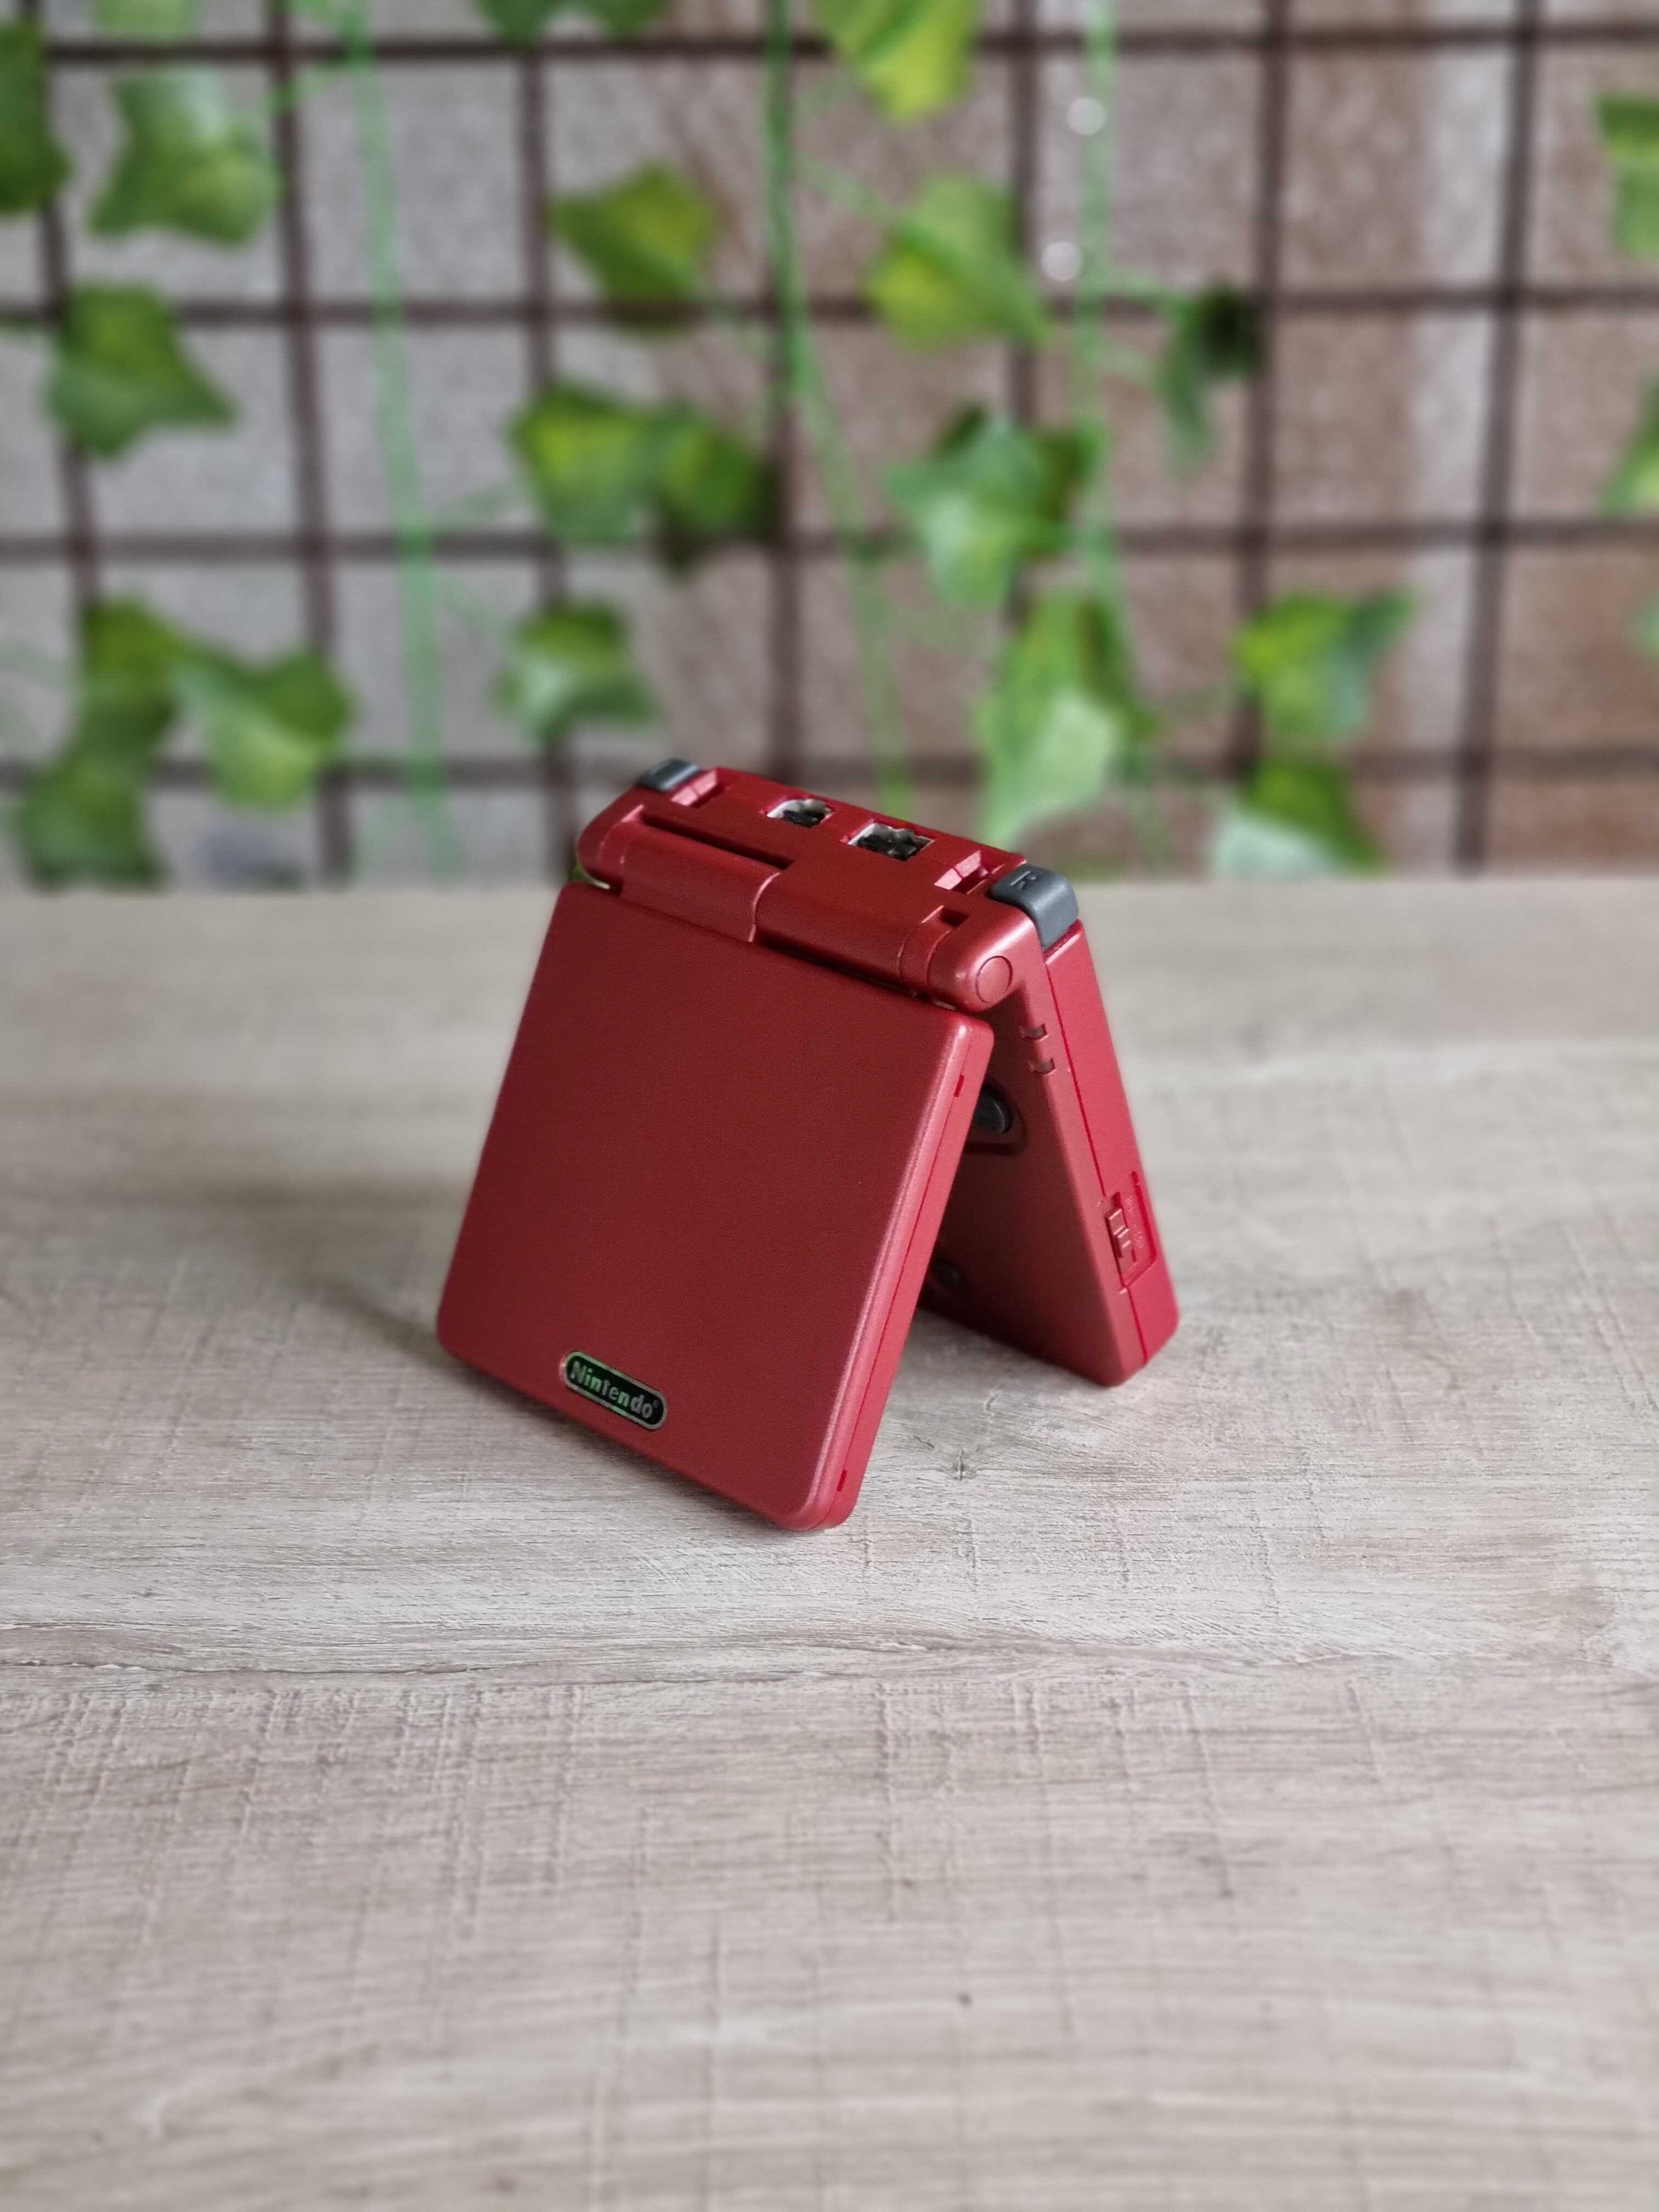 Gameboy Advance SP Red (Modded) - Gameboy Advance Hardware - 2